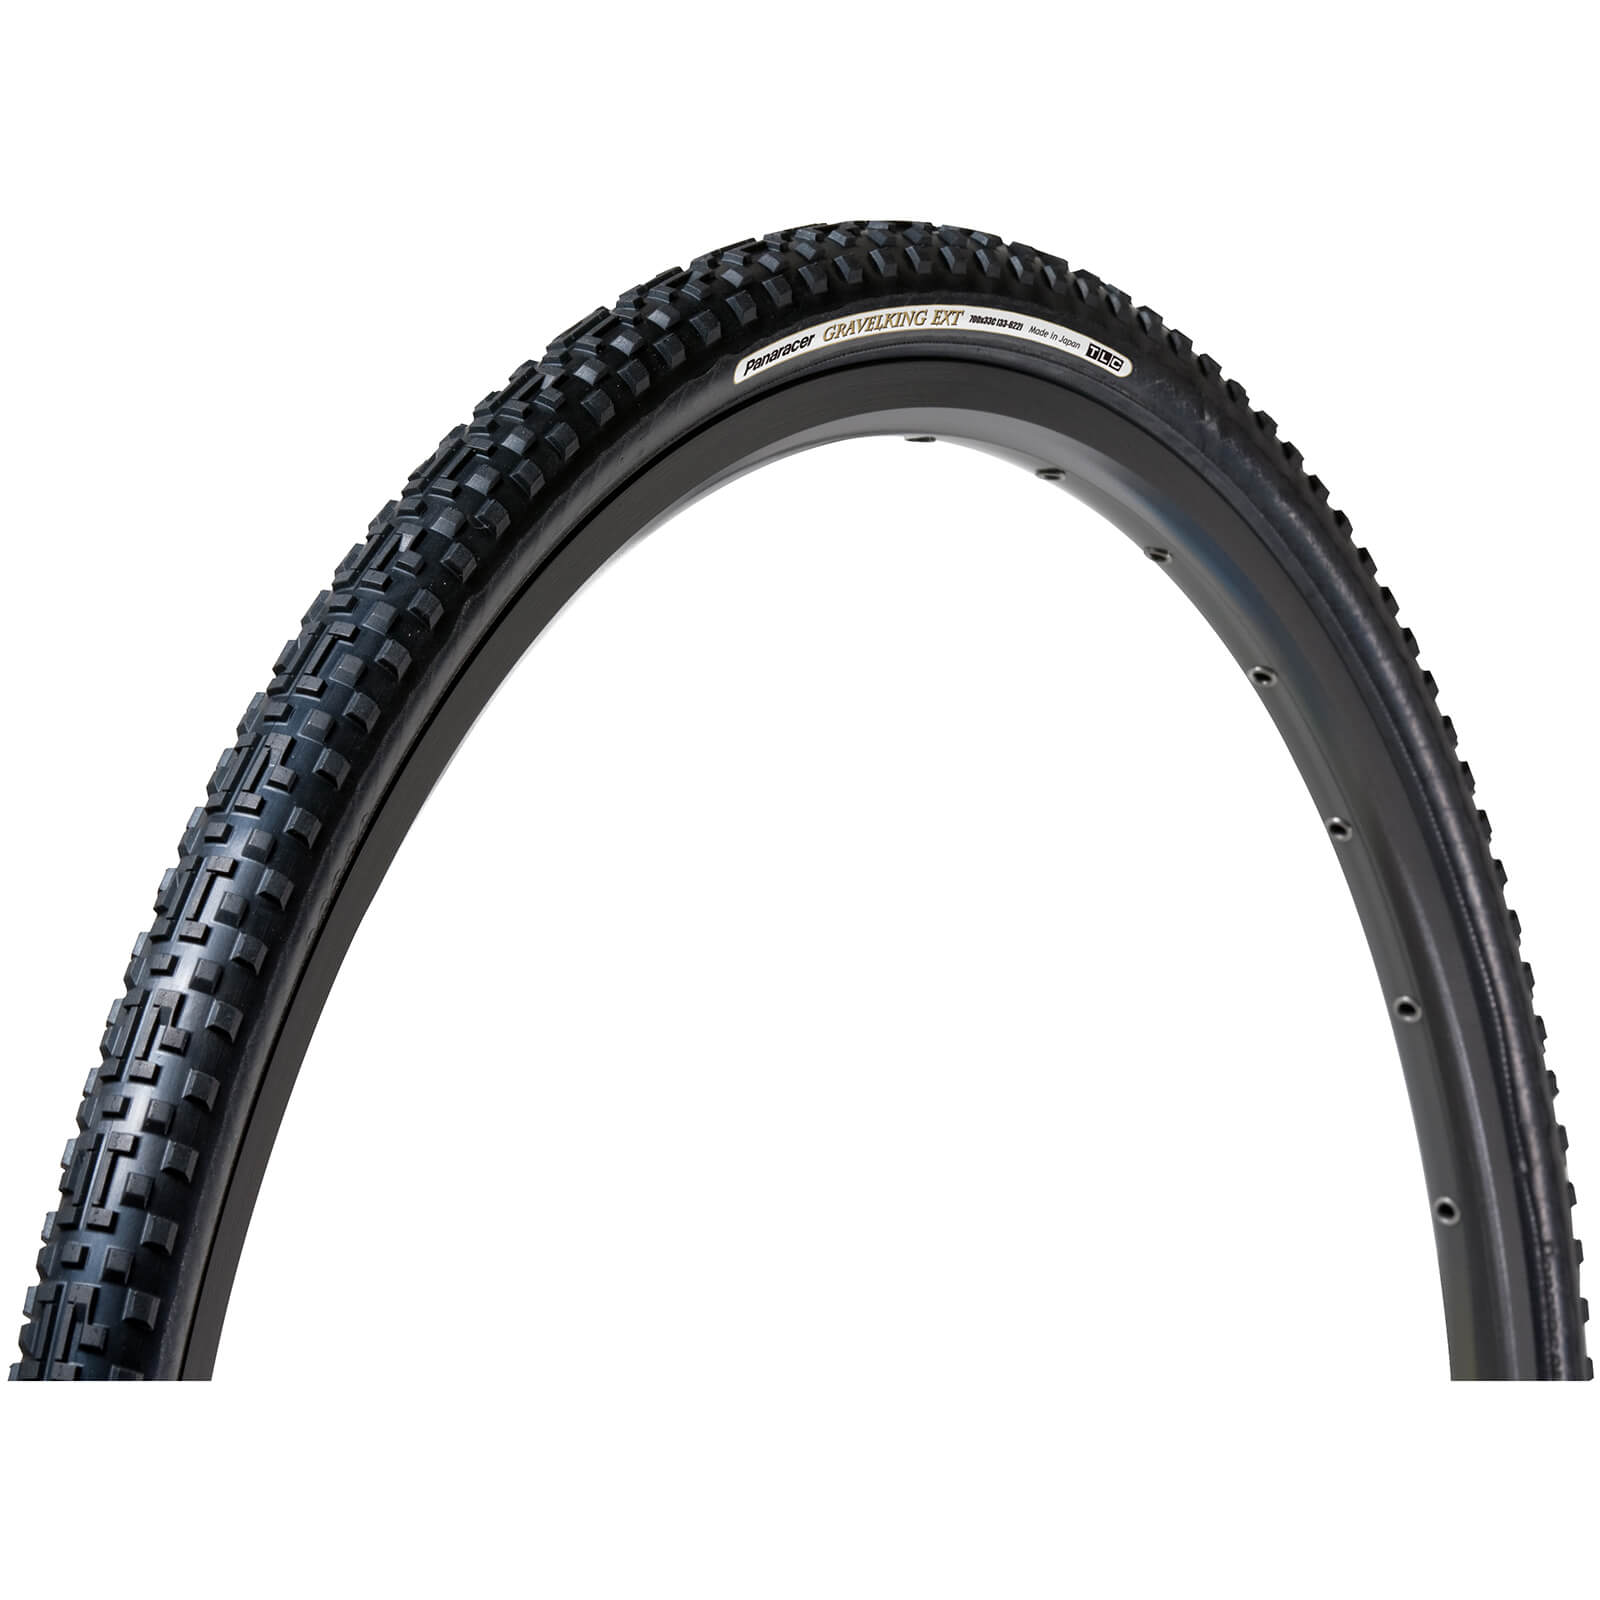 Panaracer Gravel King EXT TLC Folding Gravel Tyre - 700 x 35C - BLACK/BLACK